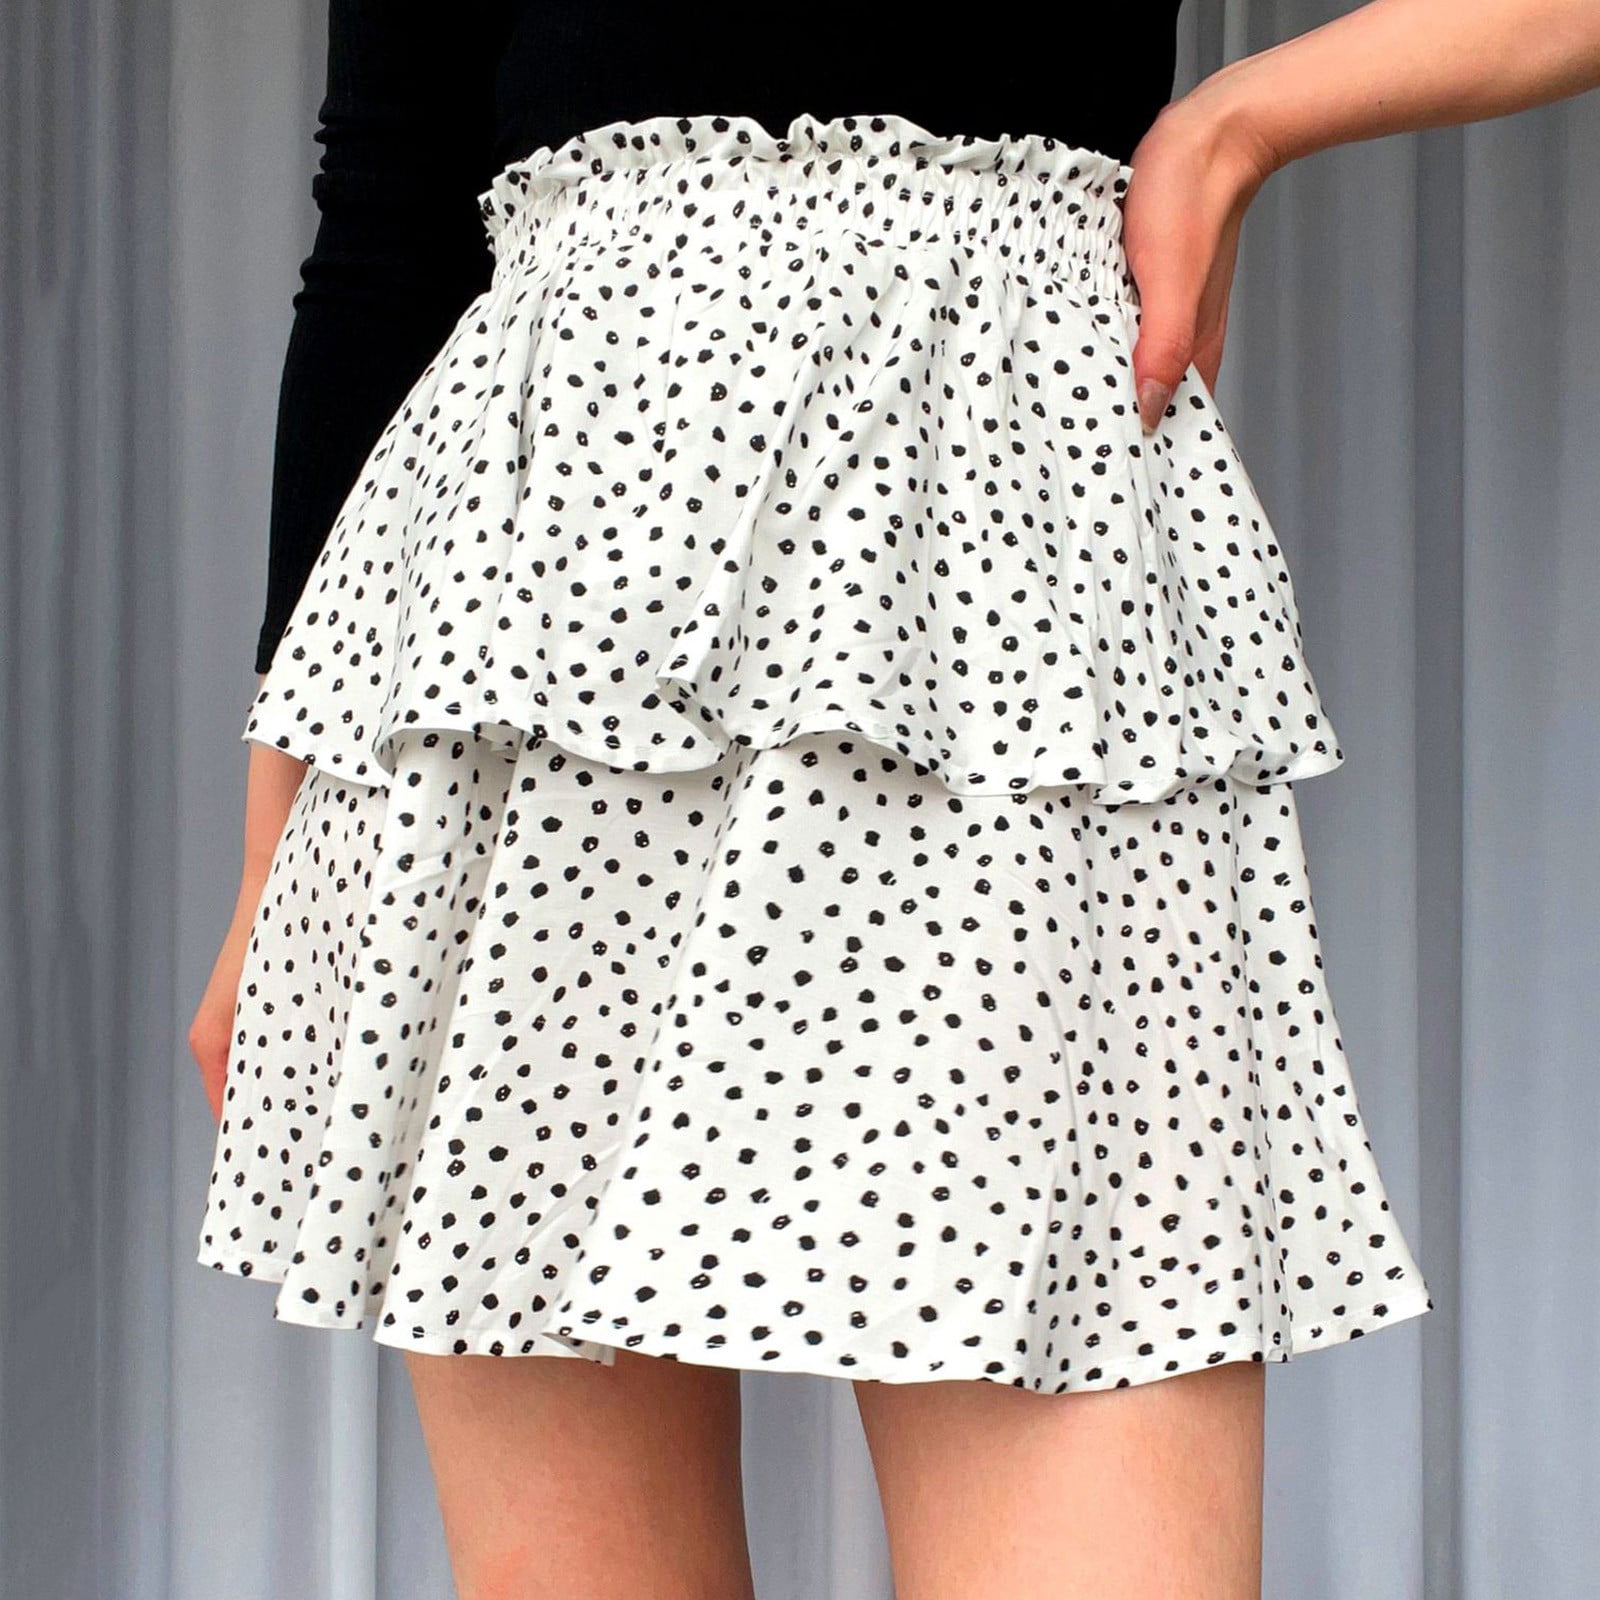 SENDKEEL skirts for women Women's Matching Solid Color Short Skirt